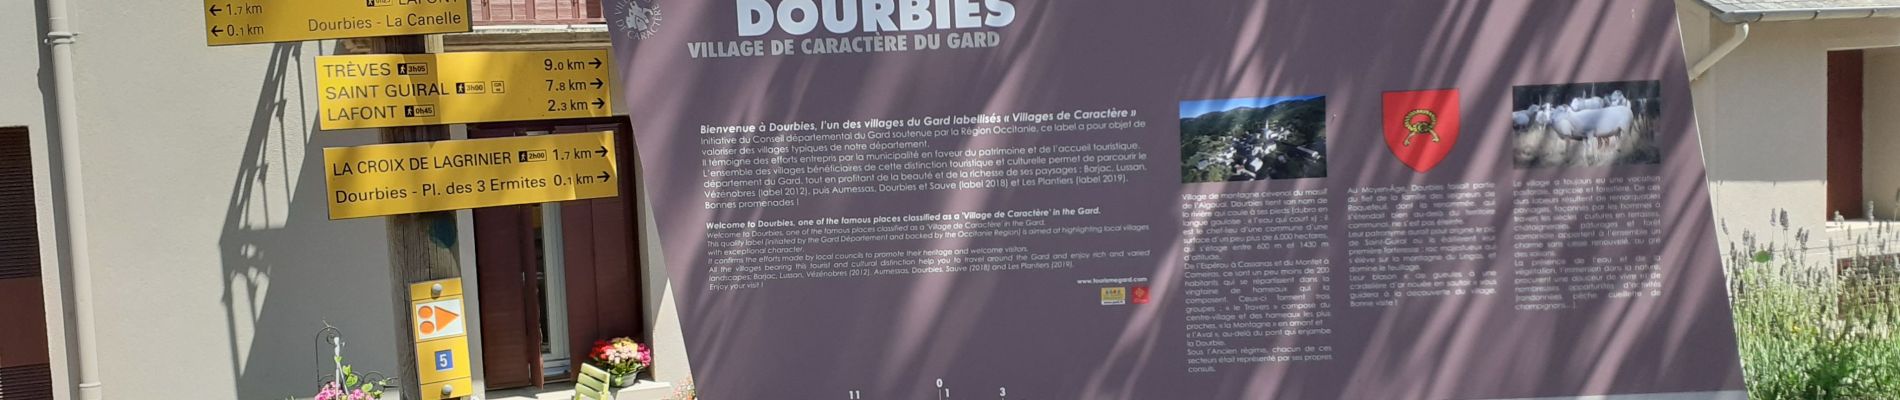 Percorso Marcia Dourbies - DOURBIE LE SUQUET - Photo